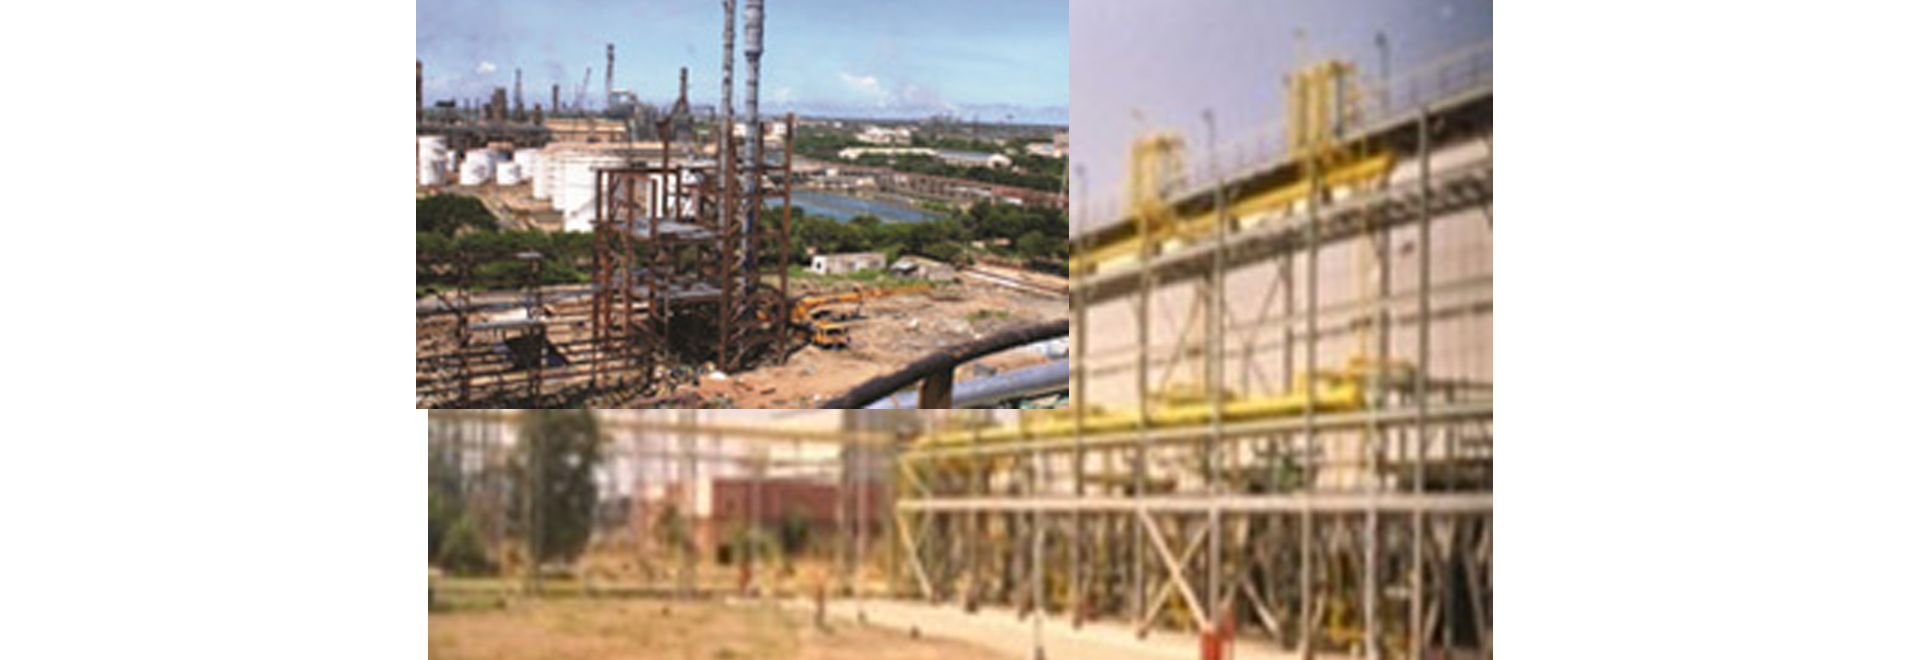 Euro-IV project – Upgradation refinery, Chennai Petroleum Corporation Ltd